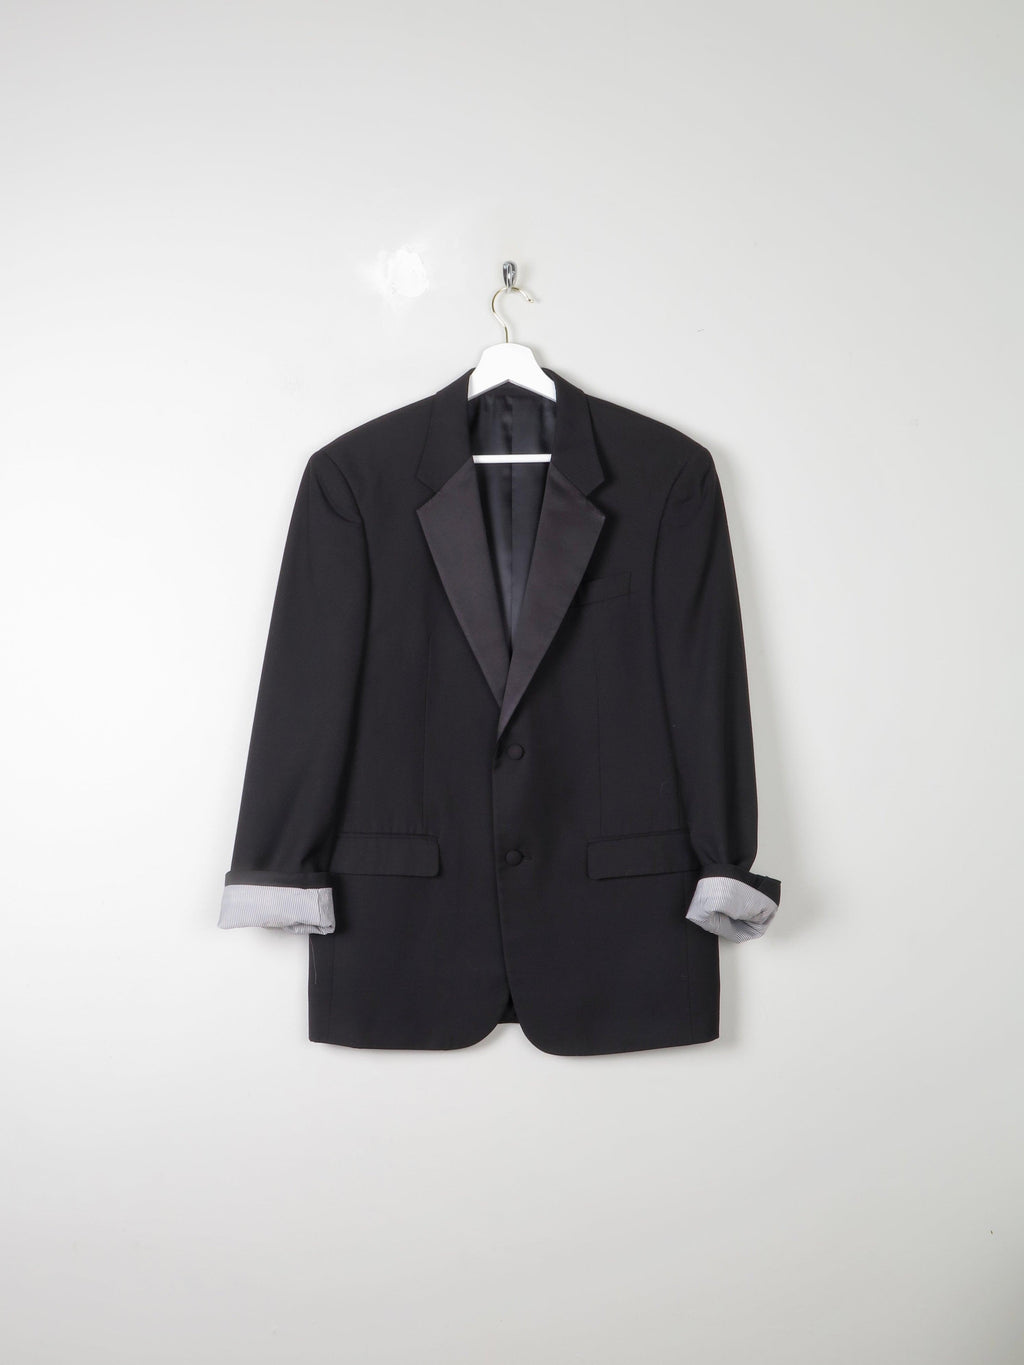 Mens Black Classic Dinner jacket/Tuxedo Jacket 40"M - The Harlequin